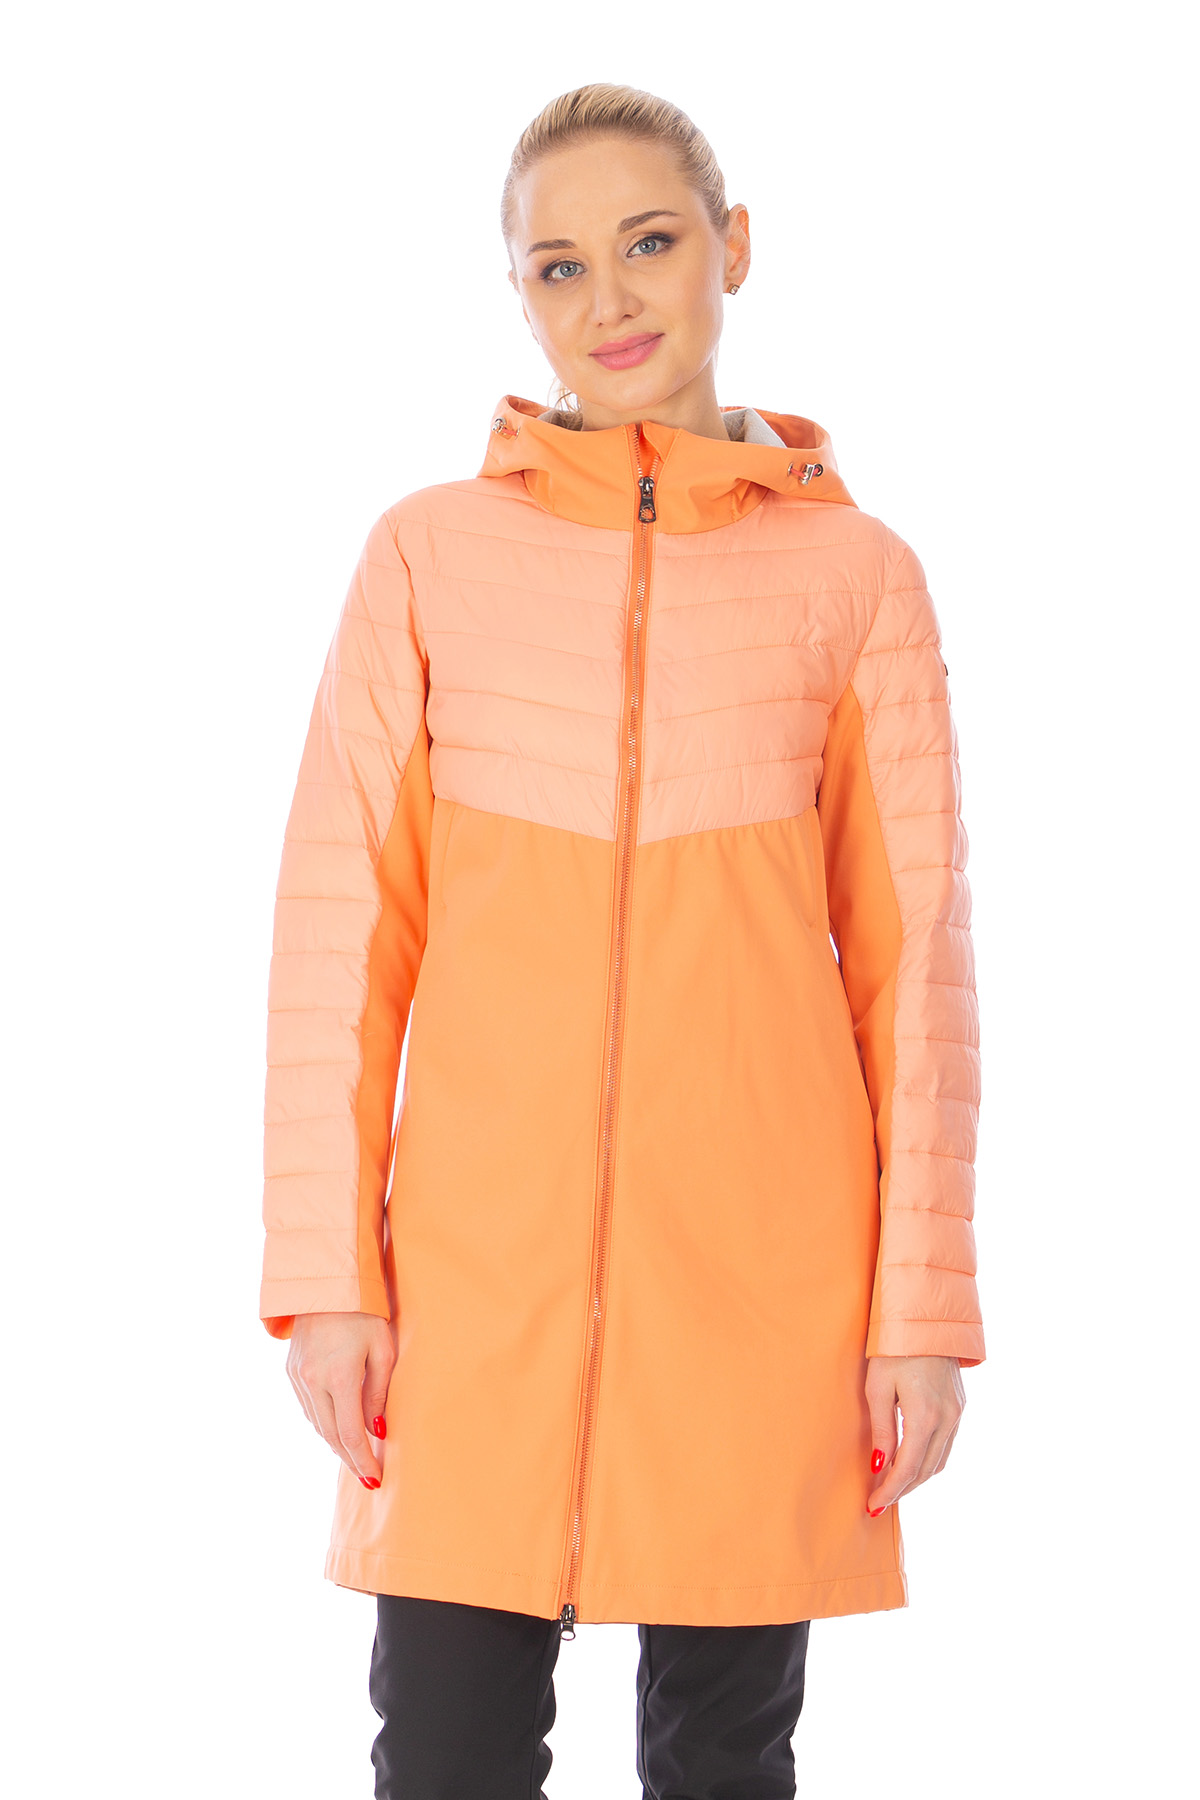 Куртка Lafor Оранжевый, 767081 (52, 3xl)